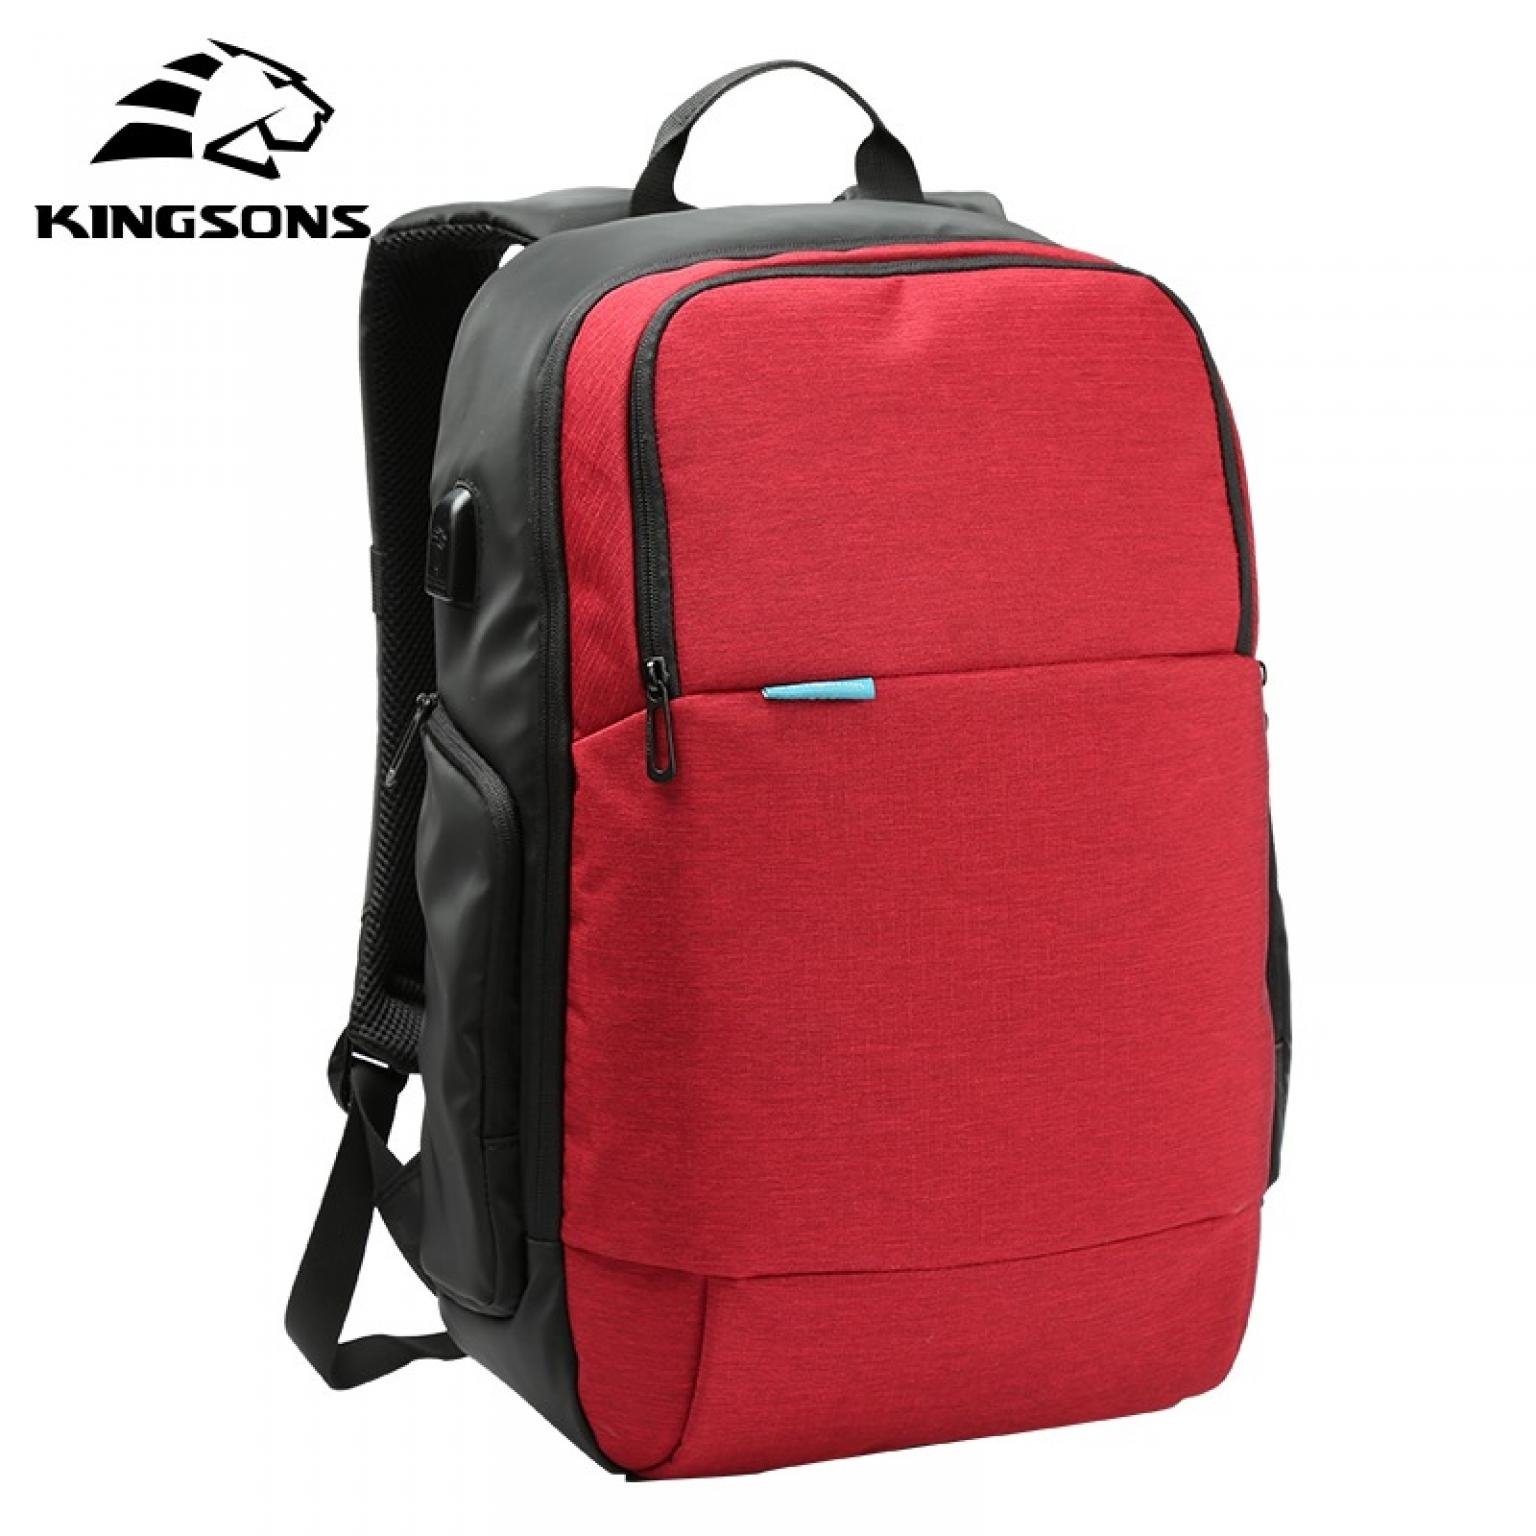 Kingsons Brand External Usb Charge Travel Backpack Anti-Theft Computer Laptop Bag 15.6 Inch Solid Men Casual Daypacks College Bag School Bag Laptop Bagpack